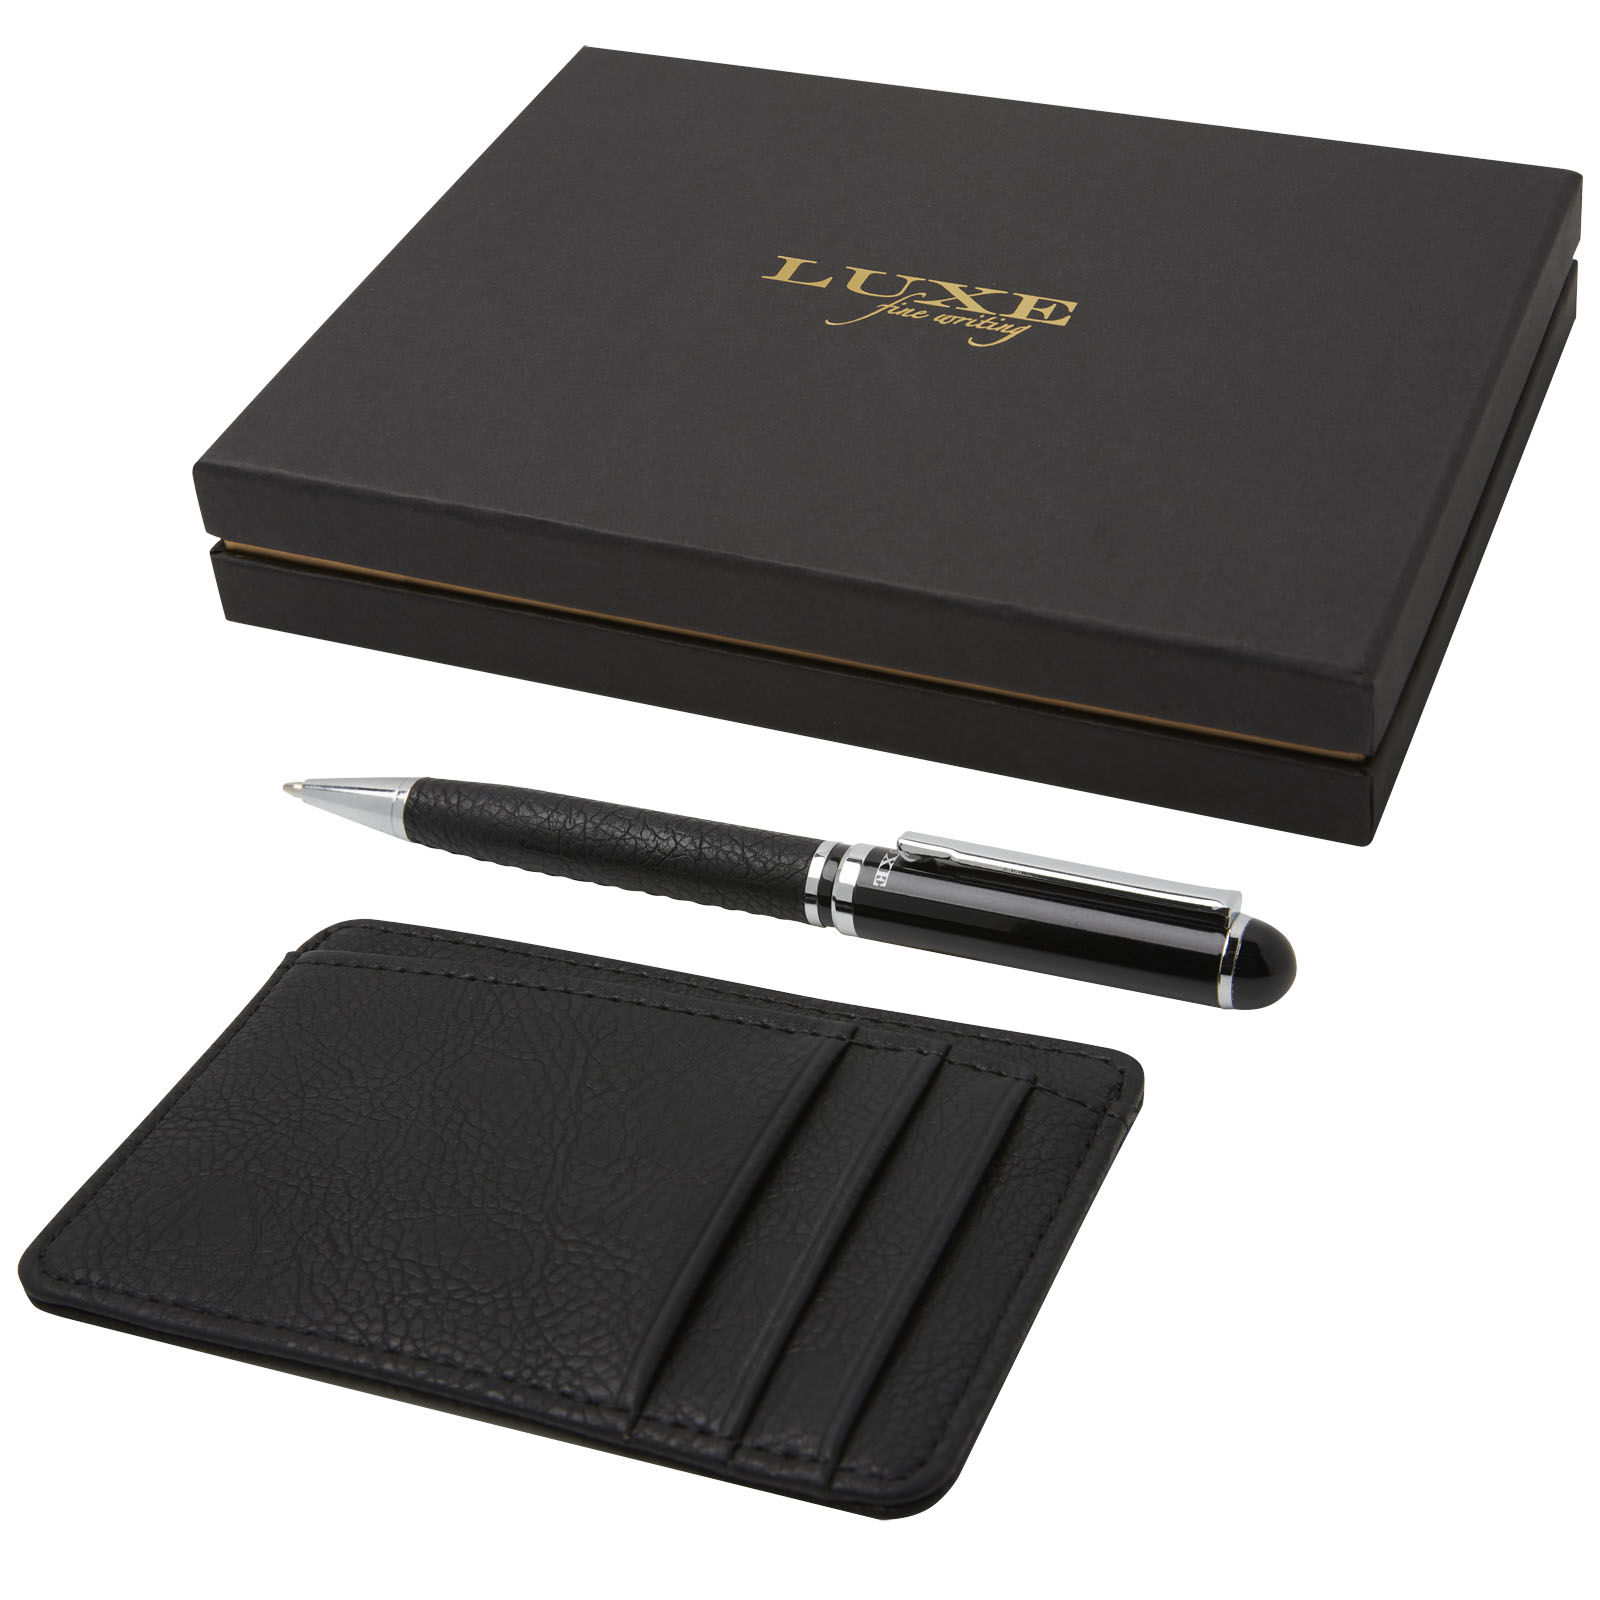 Pens & Writing - Encore ballpoint pen and wallet gift set